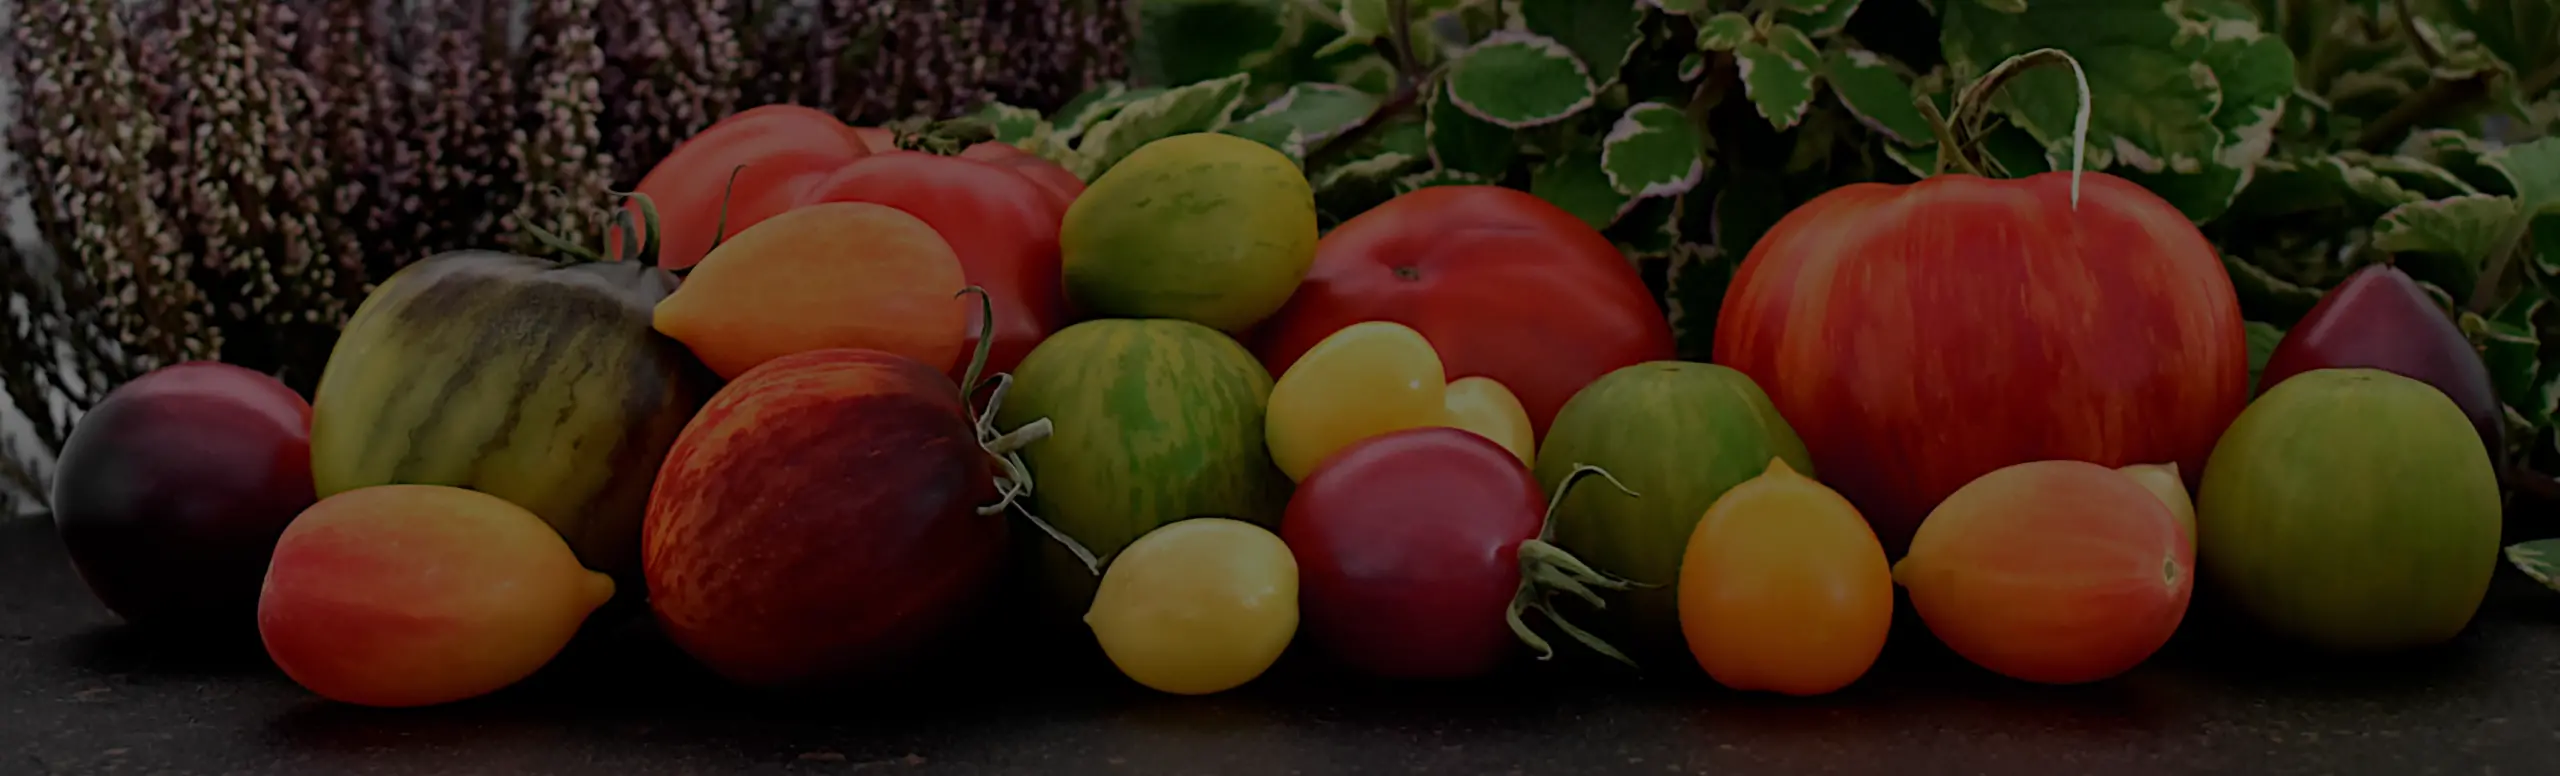 Tomato Taxonomy Maturity